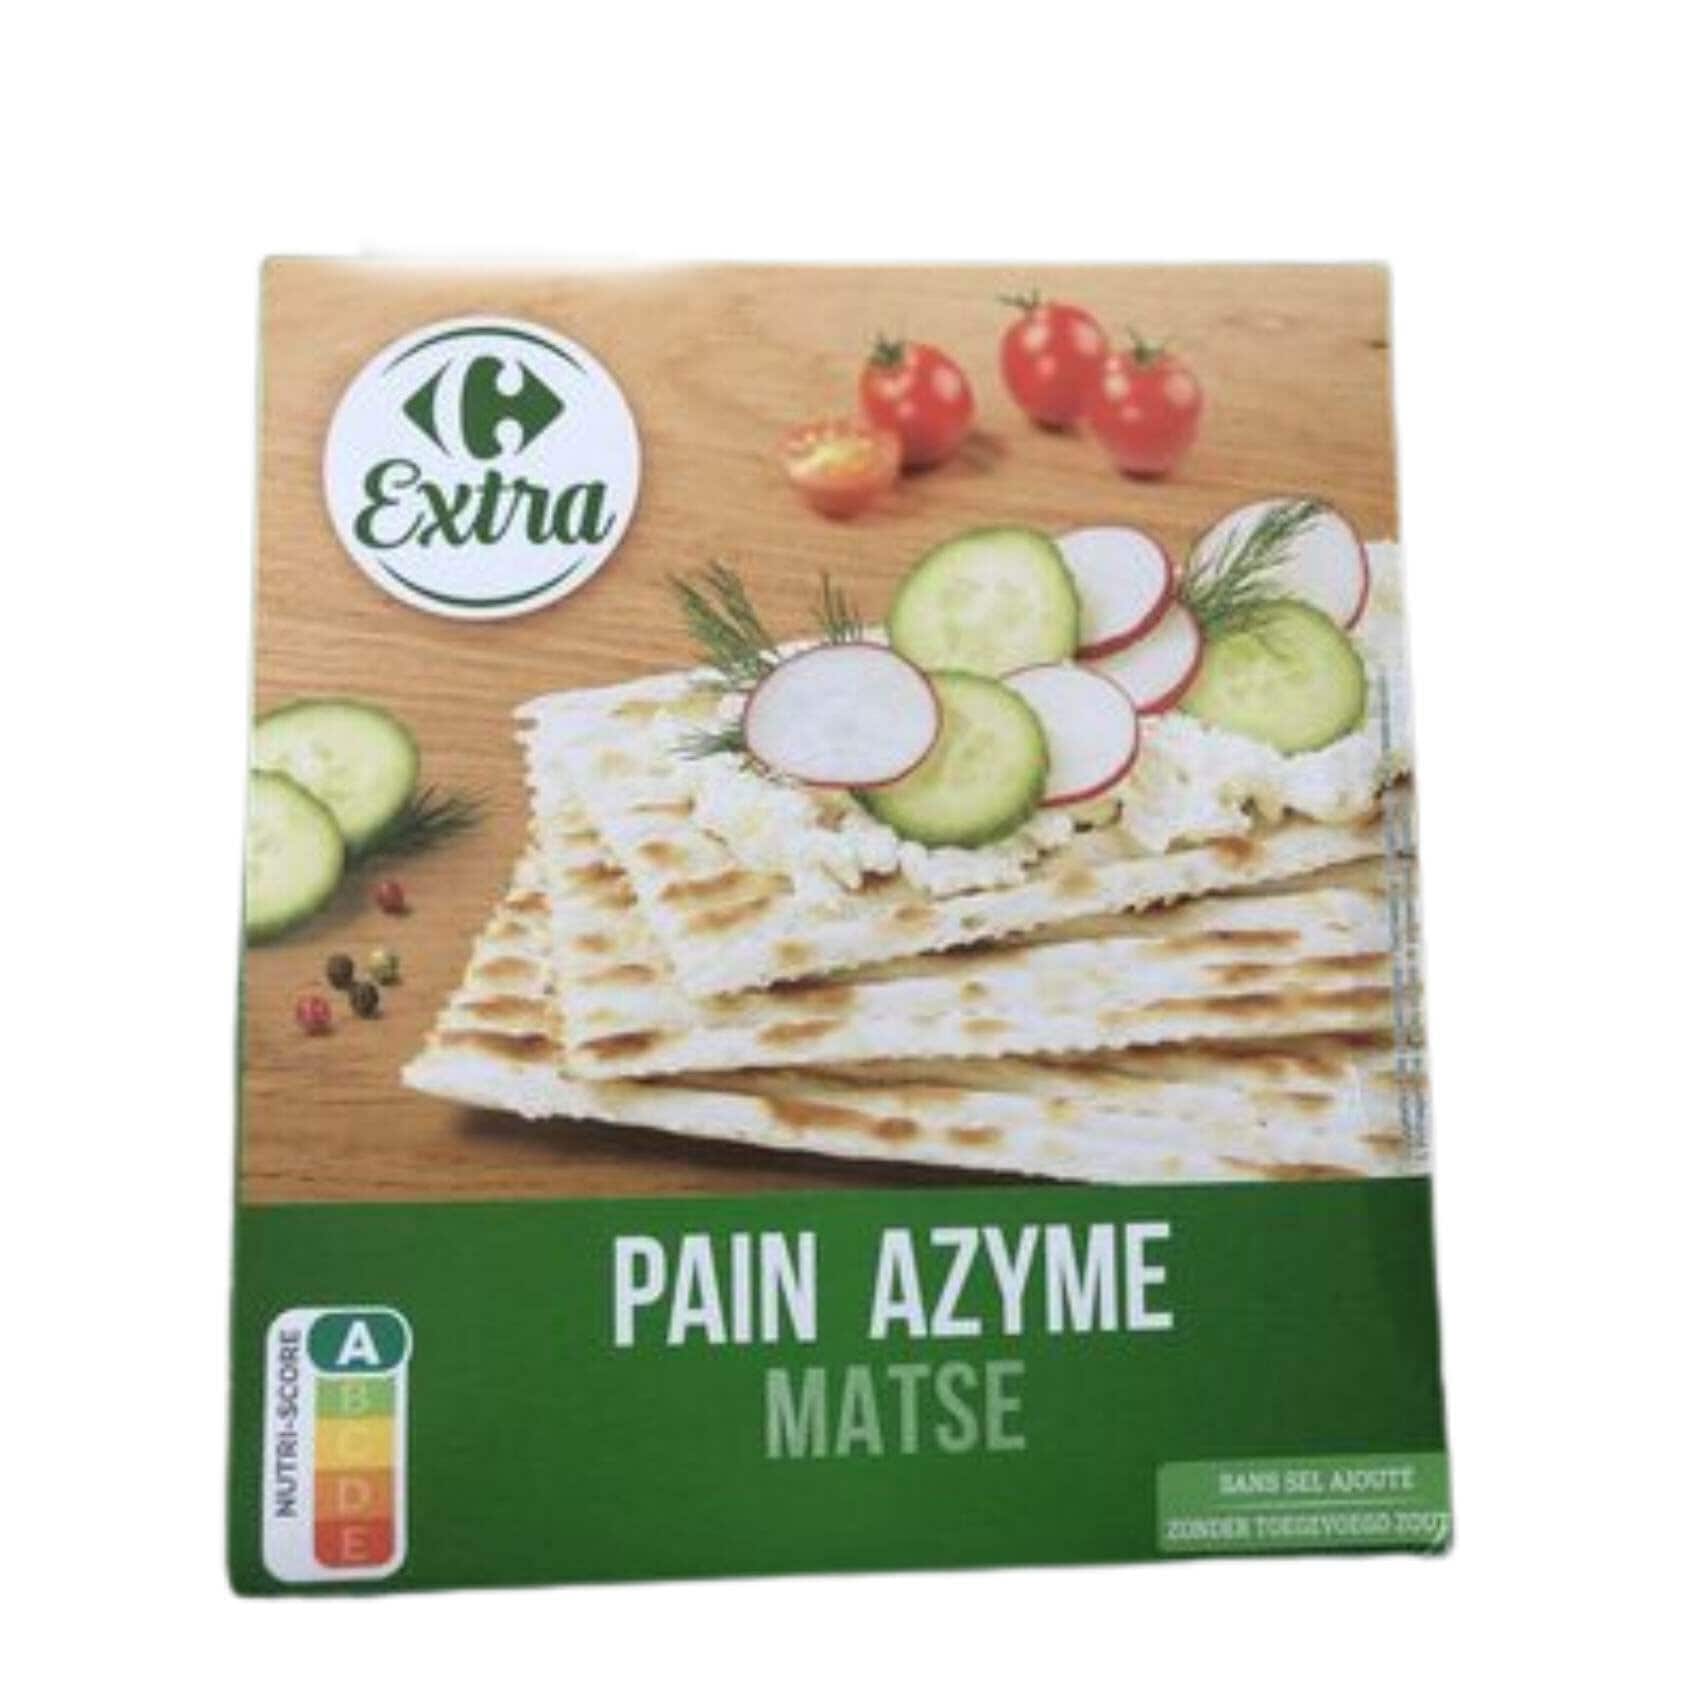 Pain Azyme